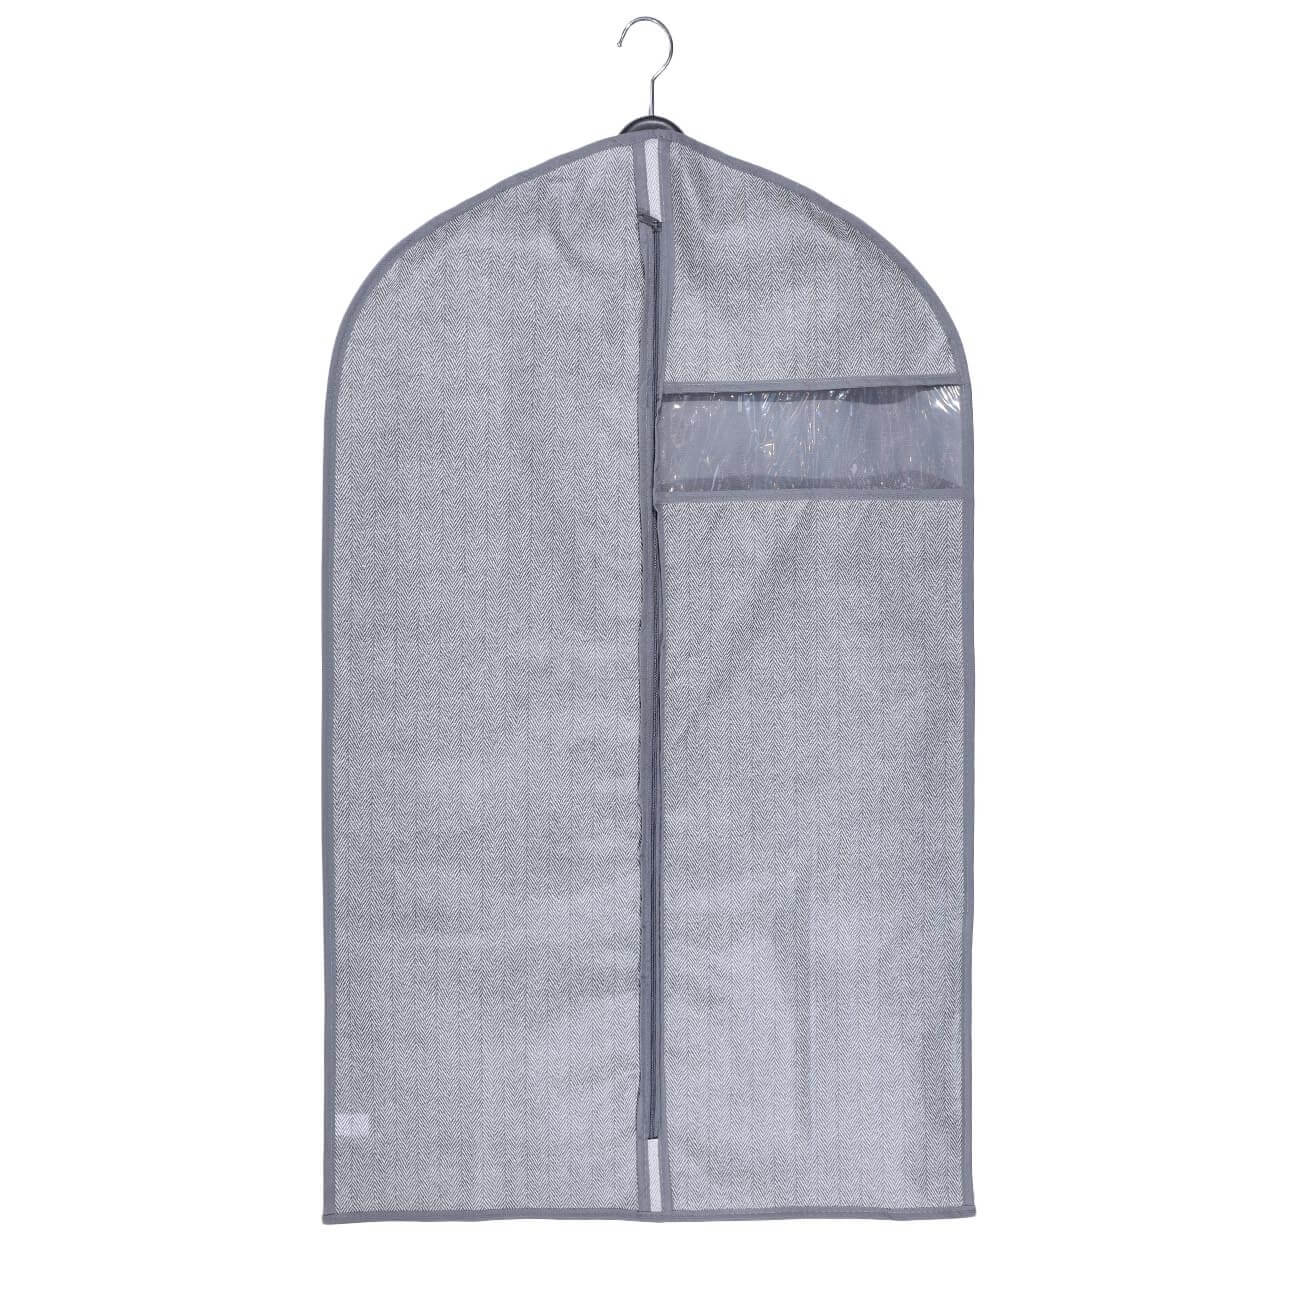 Чехол для одежды, 60х100 см, текстиль/ПВХ, серый, Pedant new чехол для одежды paxwell